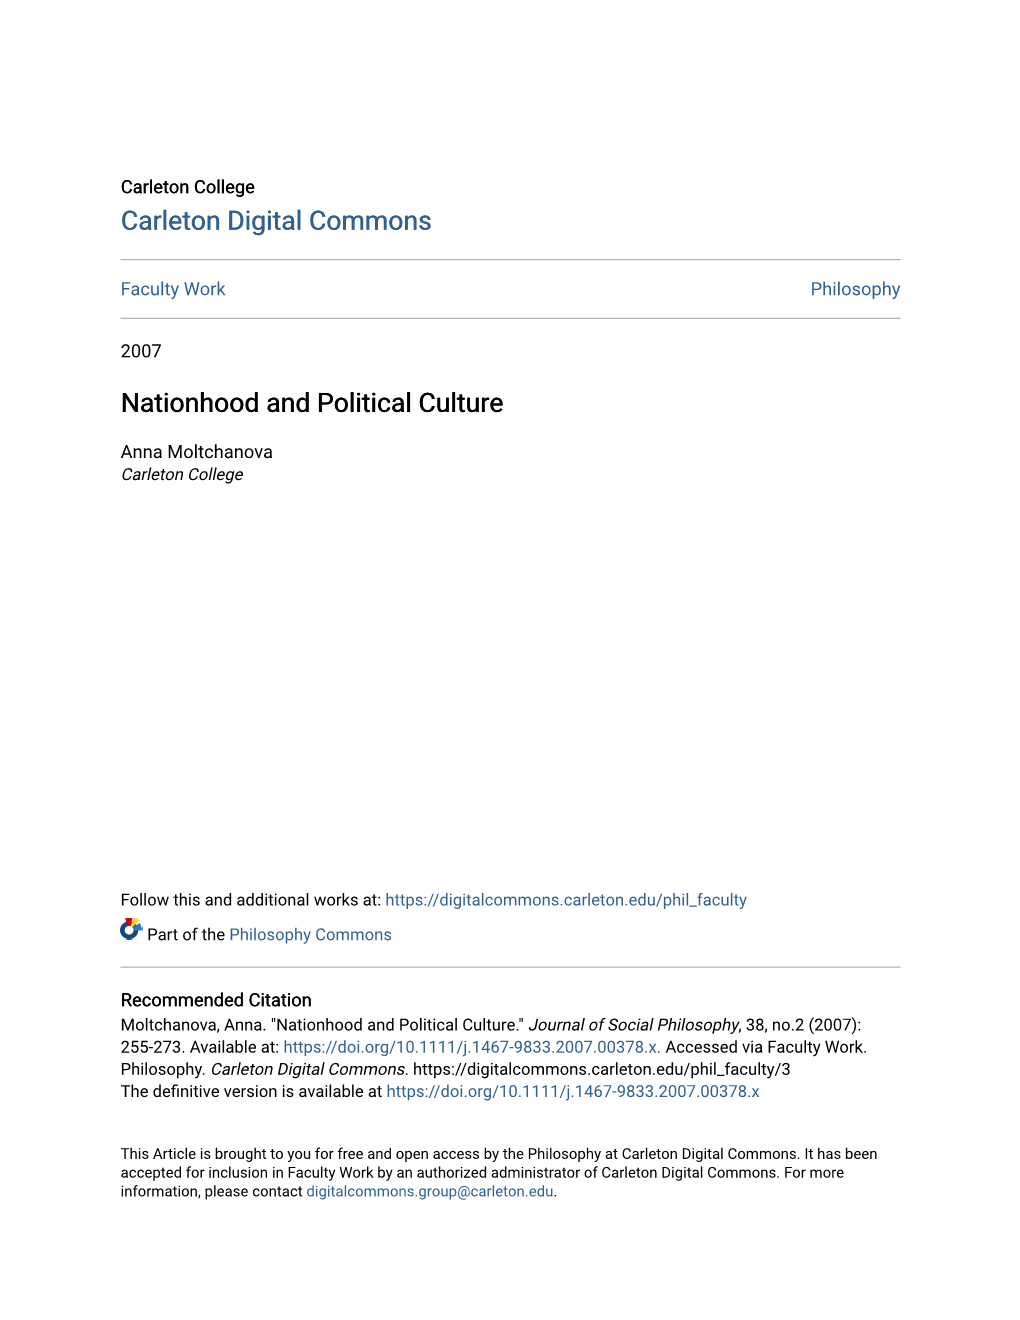 Nationhood and Political Culture